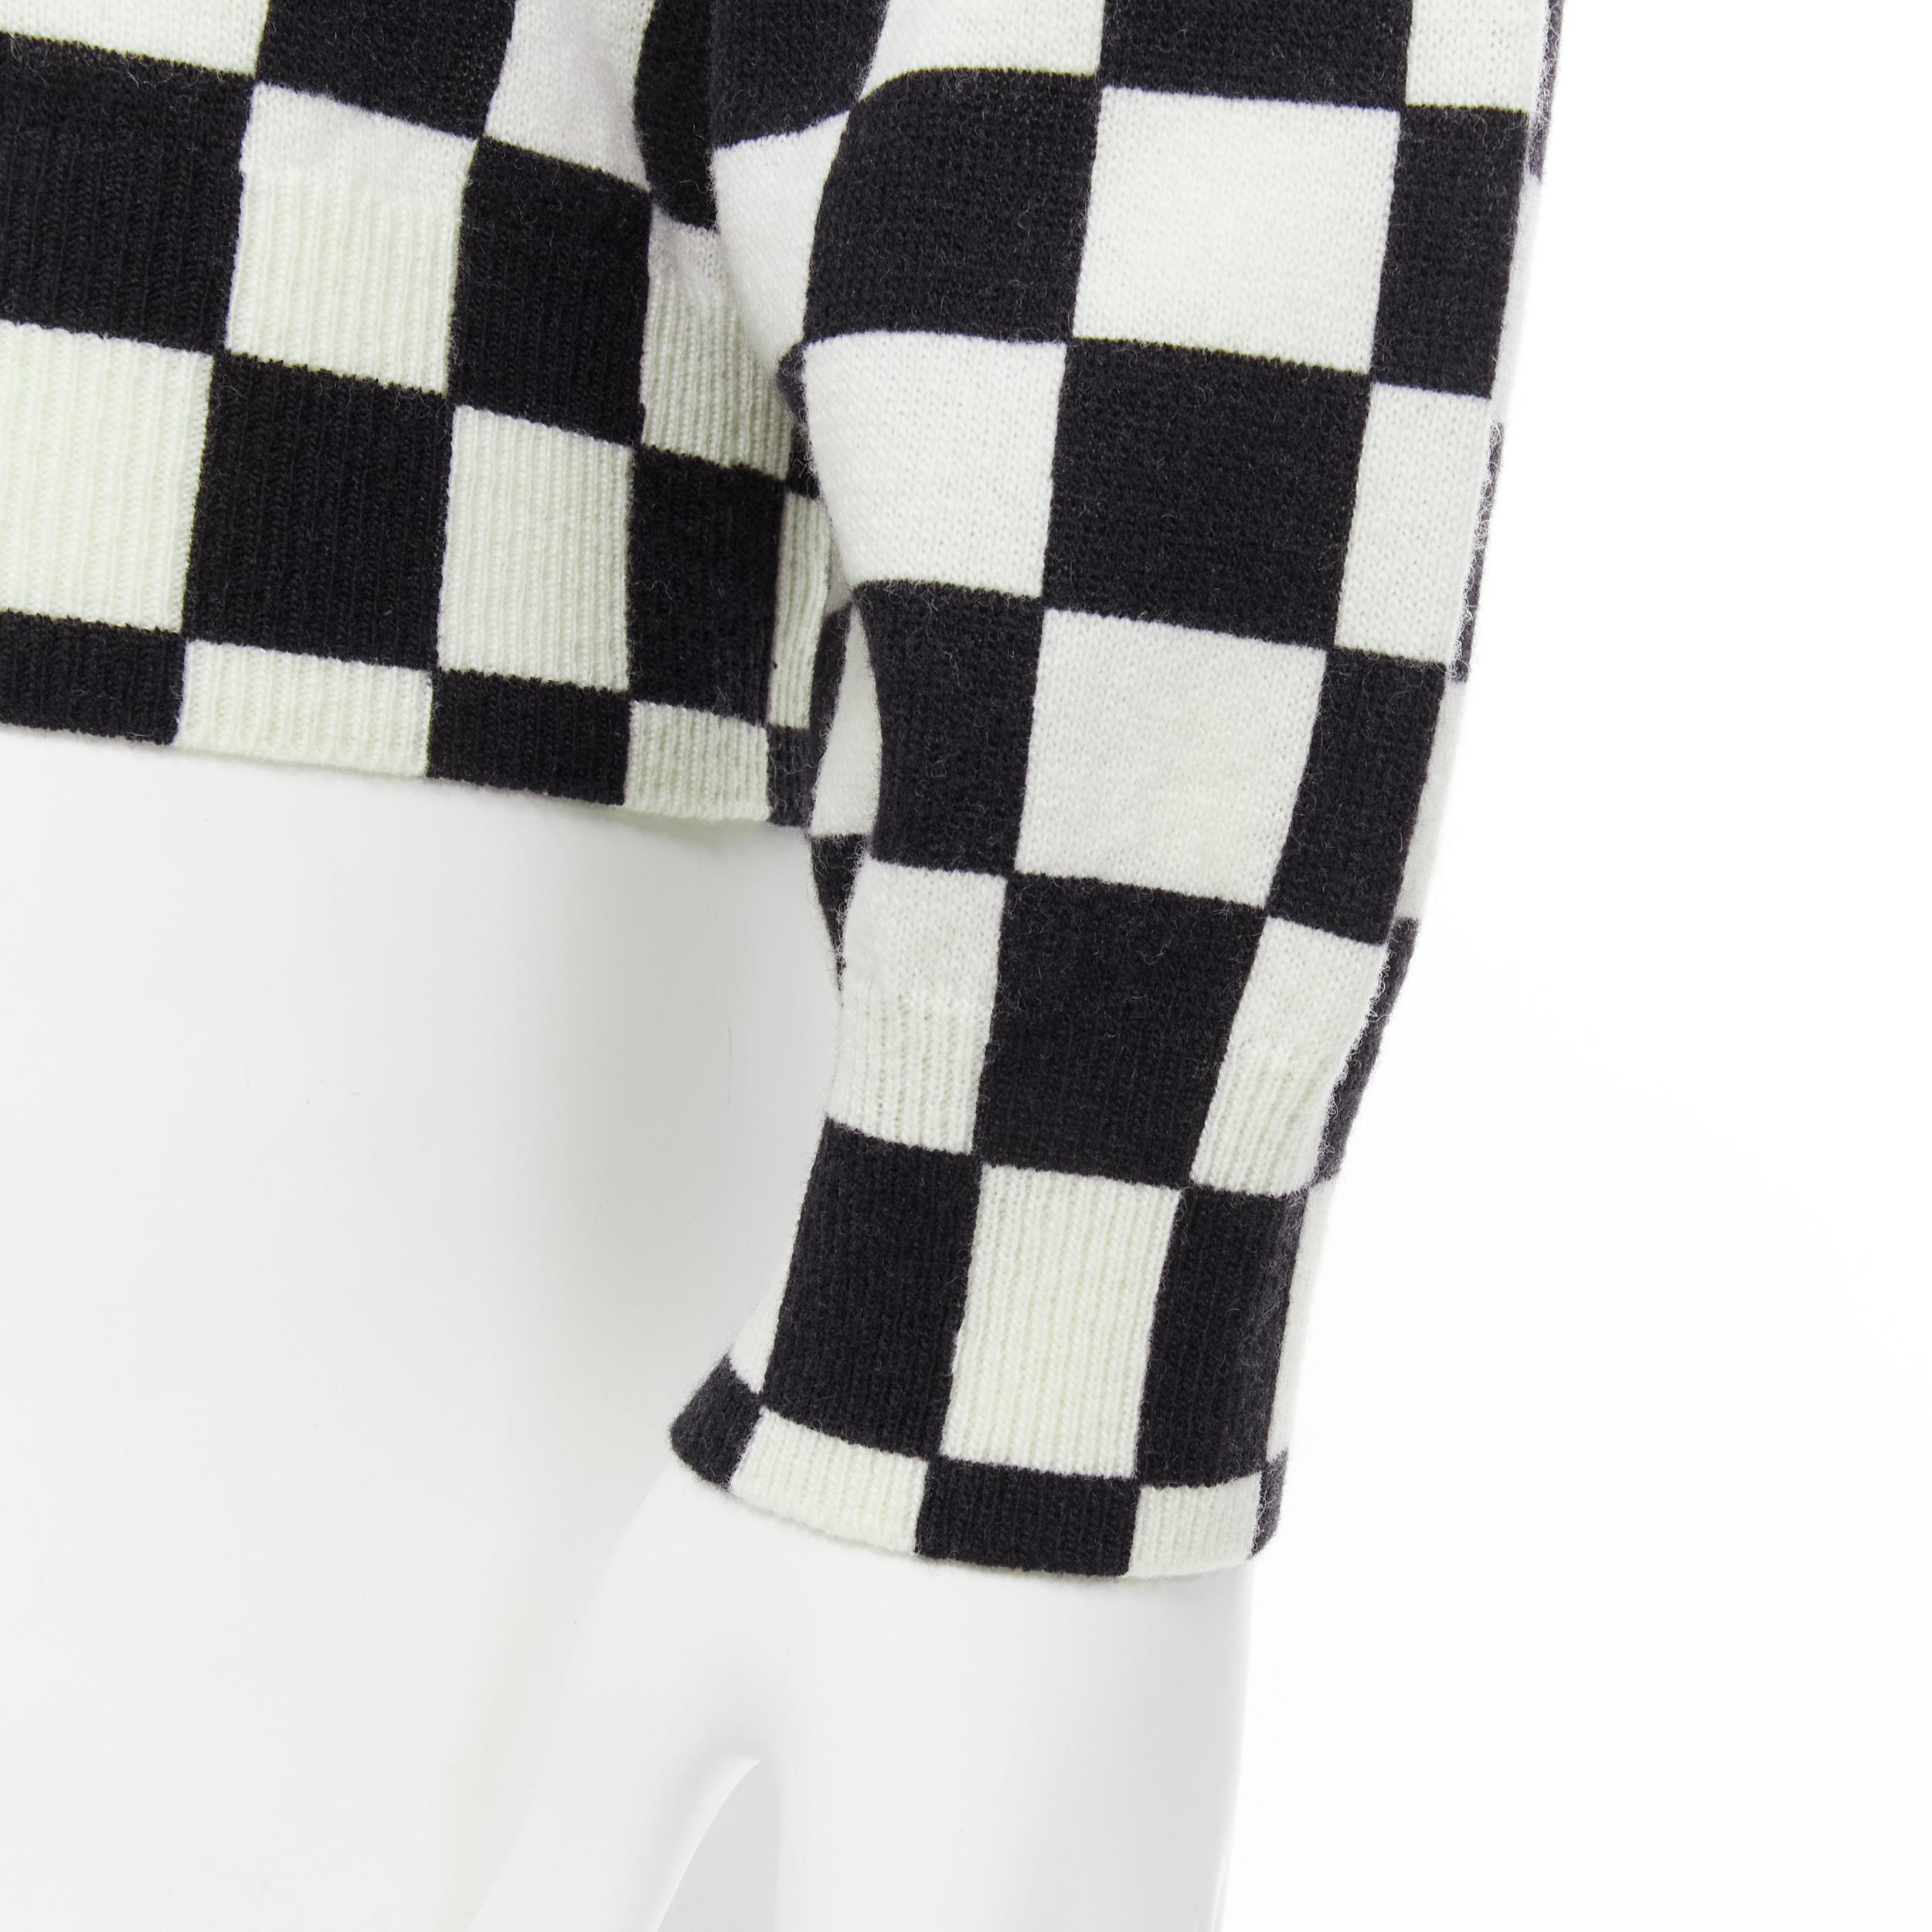 new CELINE Hedi Slimane 2019 Runway black white Damier checkered polo sweater M 1